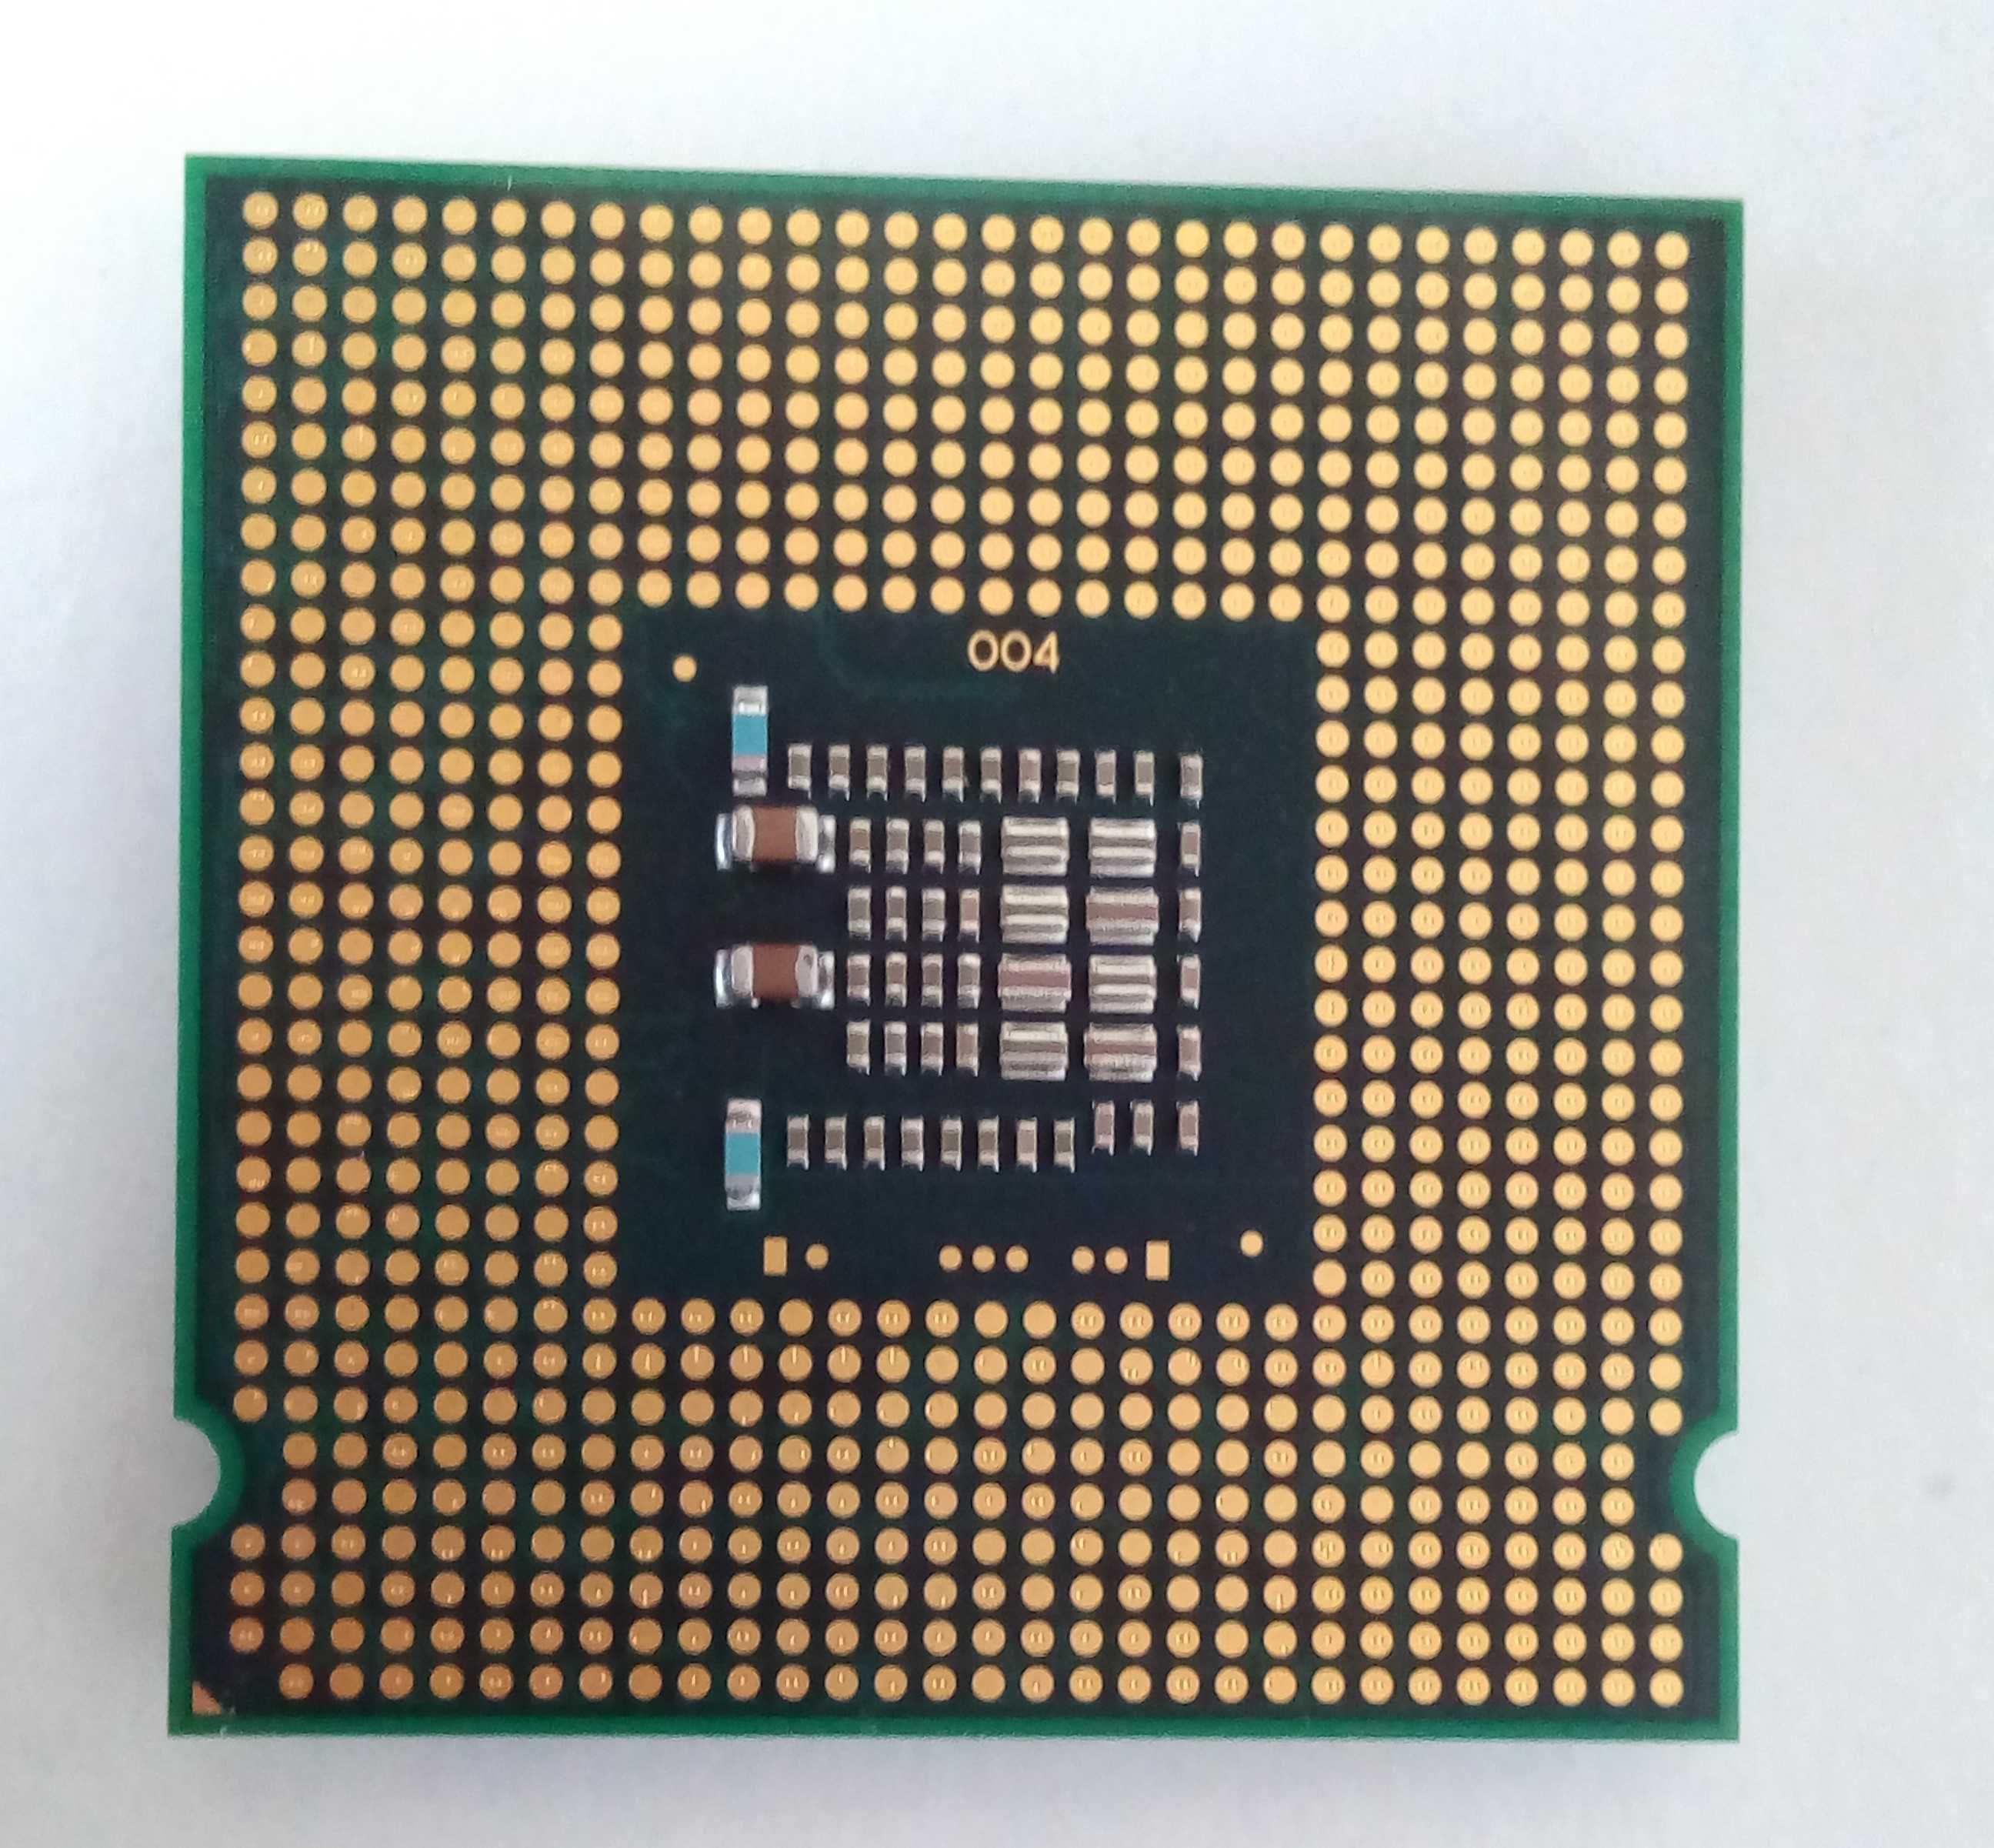 Процессор Intel Celeron E3400